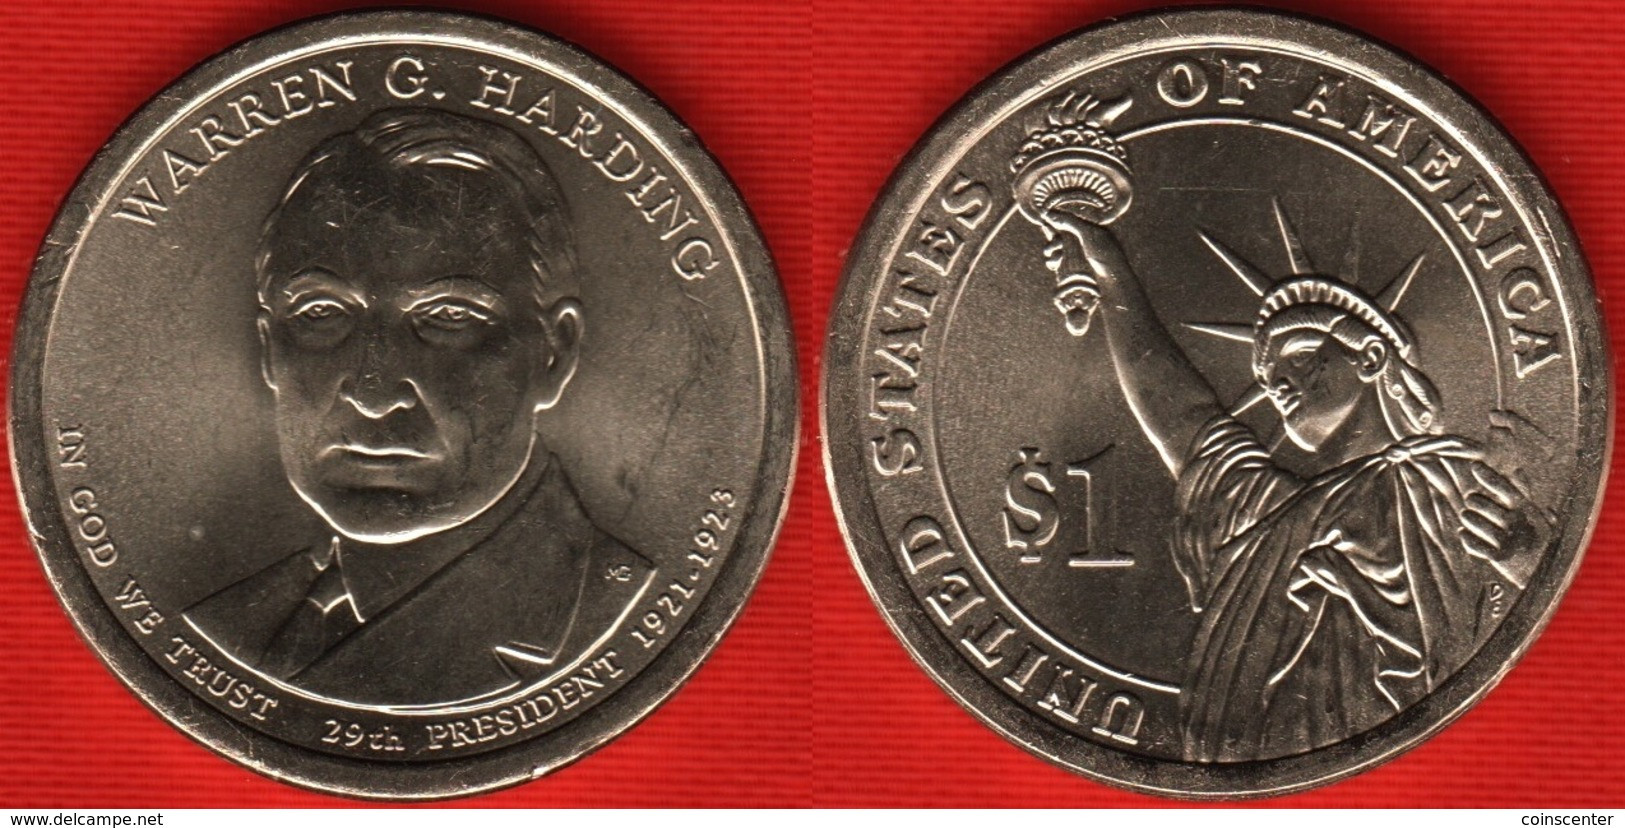 USA 1 Dollar 2014 D Mint "Warren G. Harding" UNC - 2007-…: Presidents